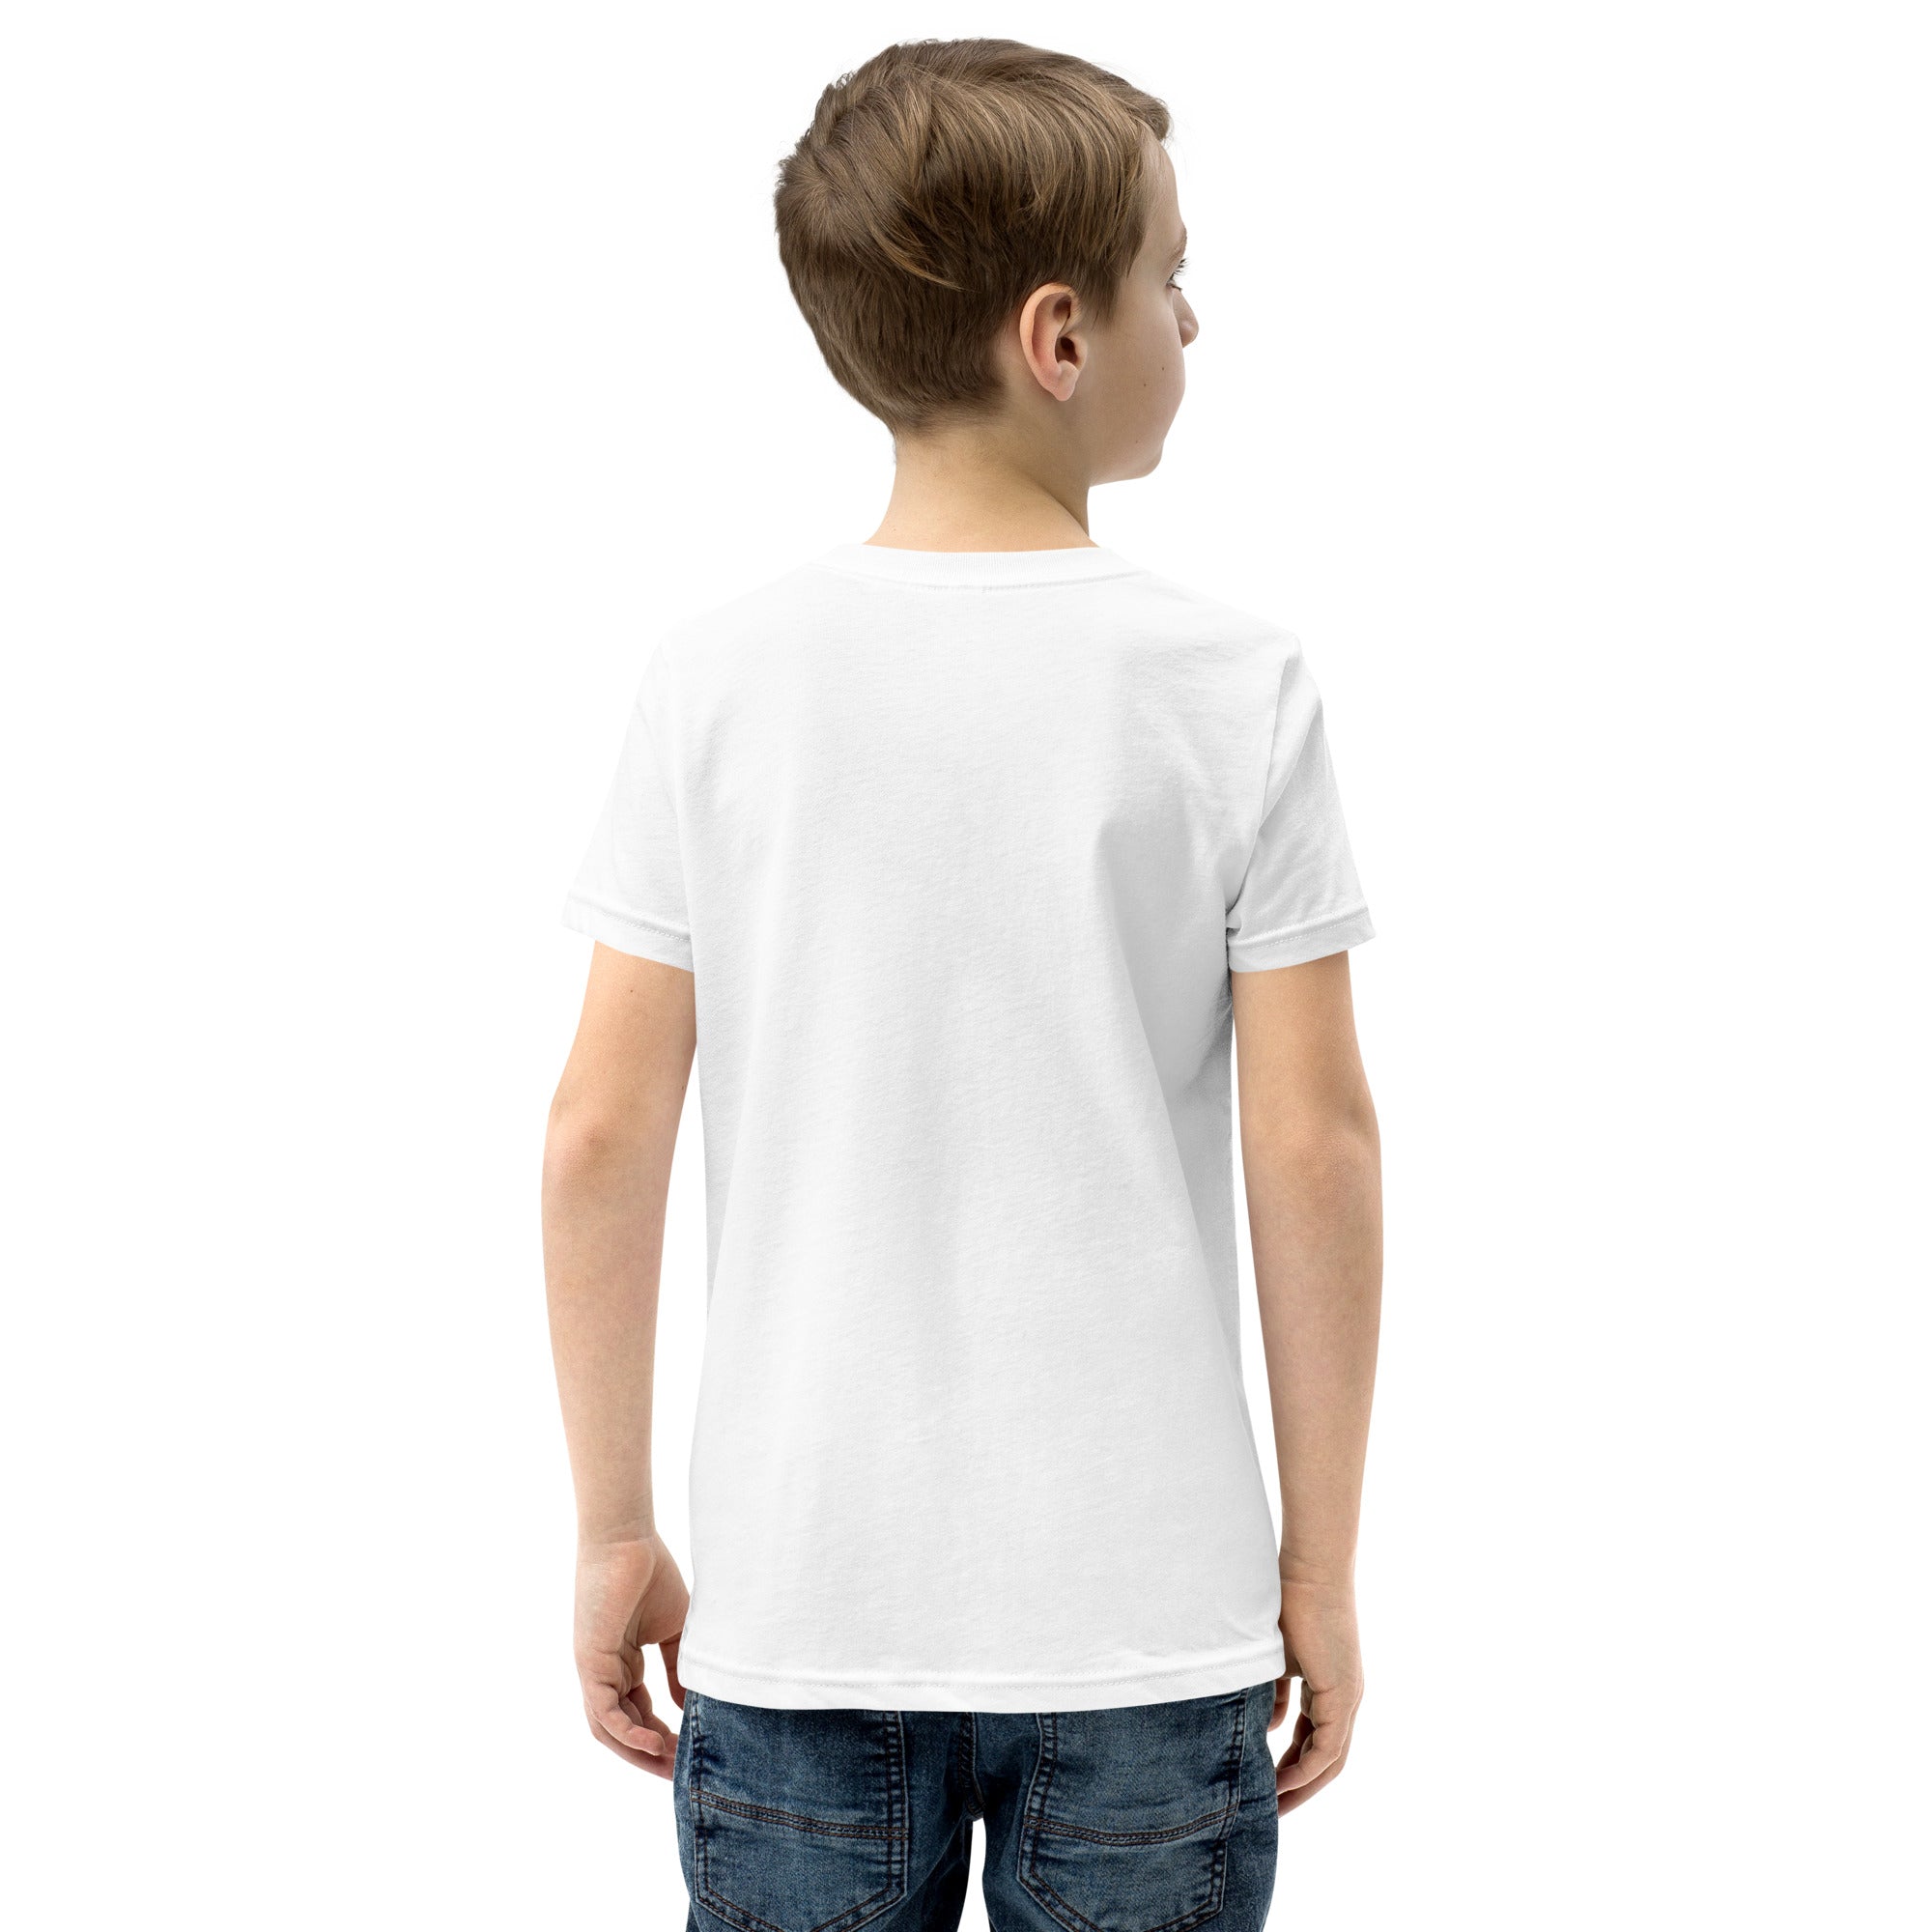 Hemlock Plaza Logo R/B - White Youth Short Sleeve T-Shirt